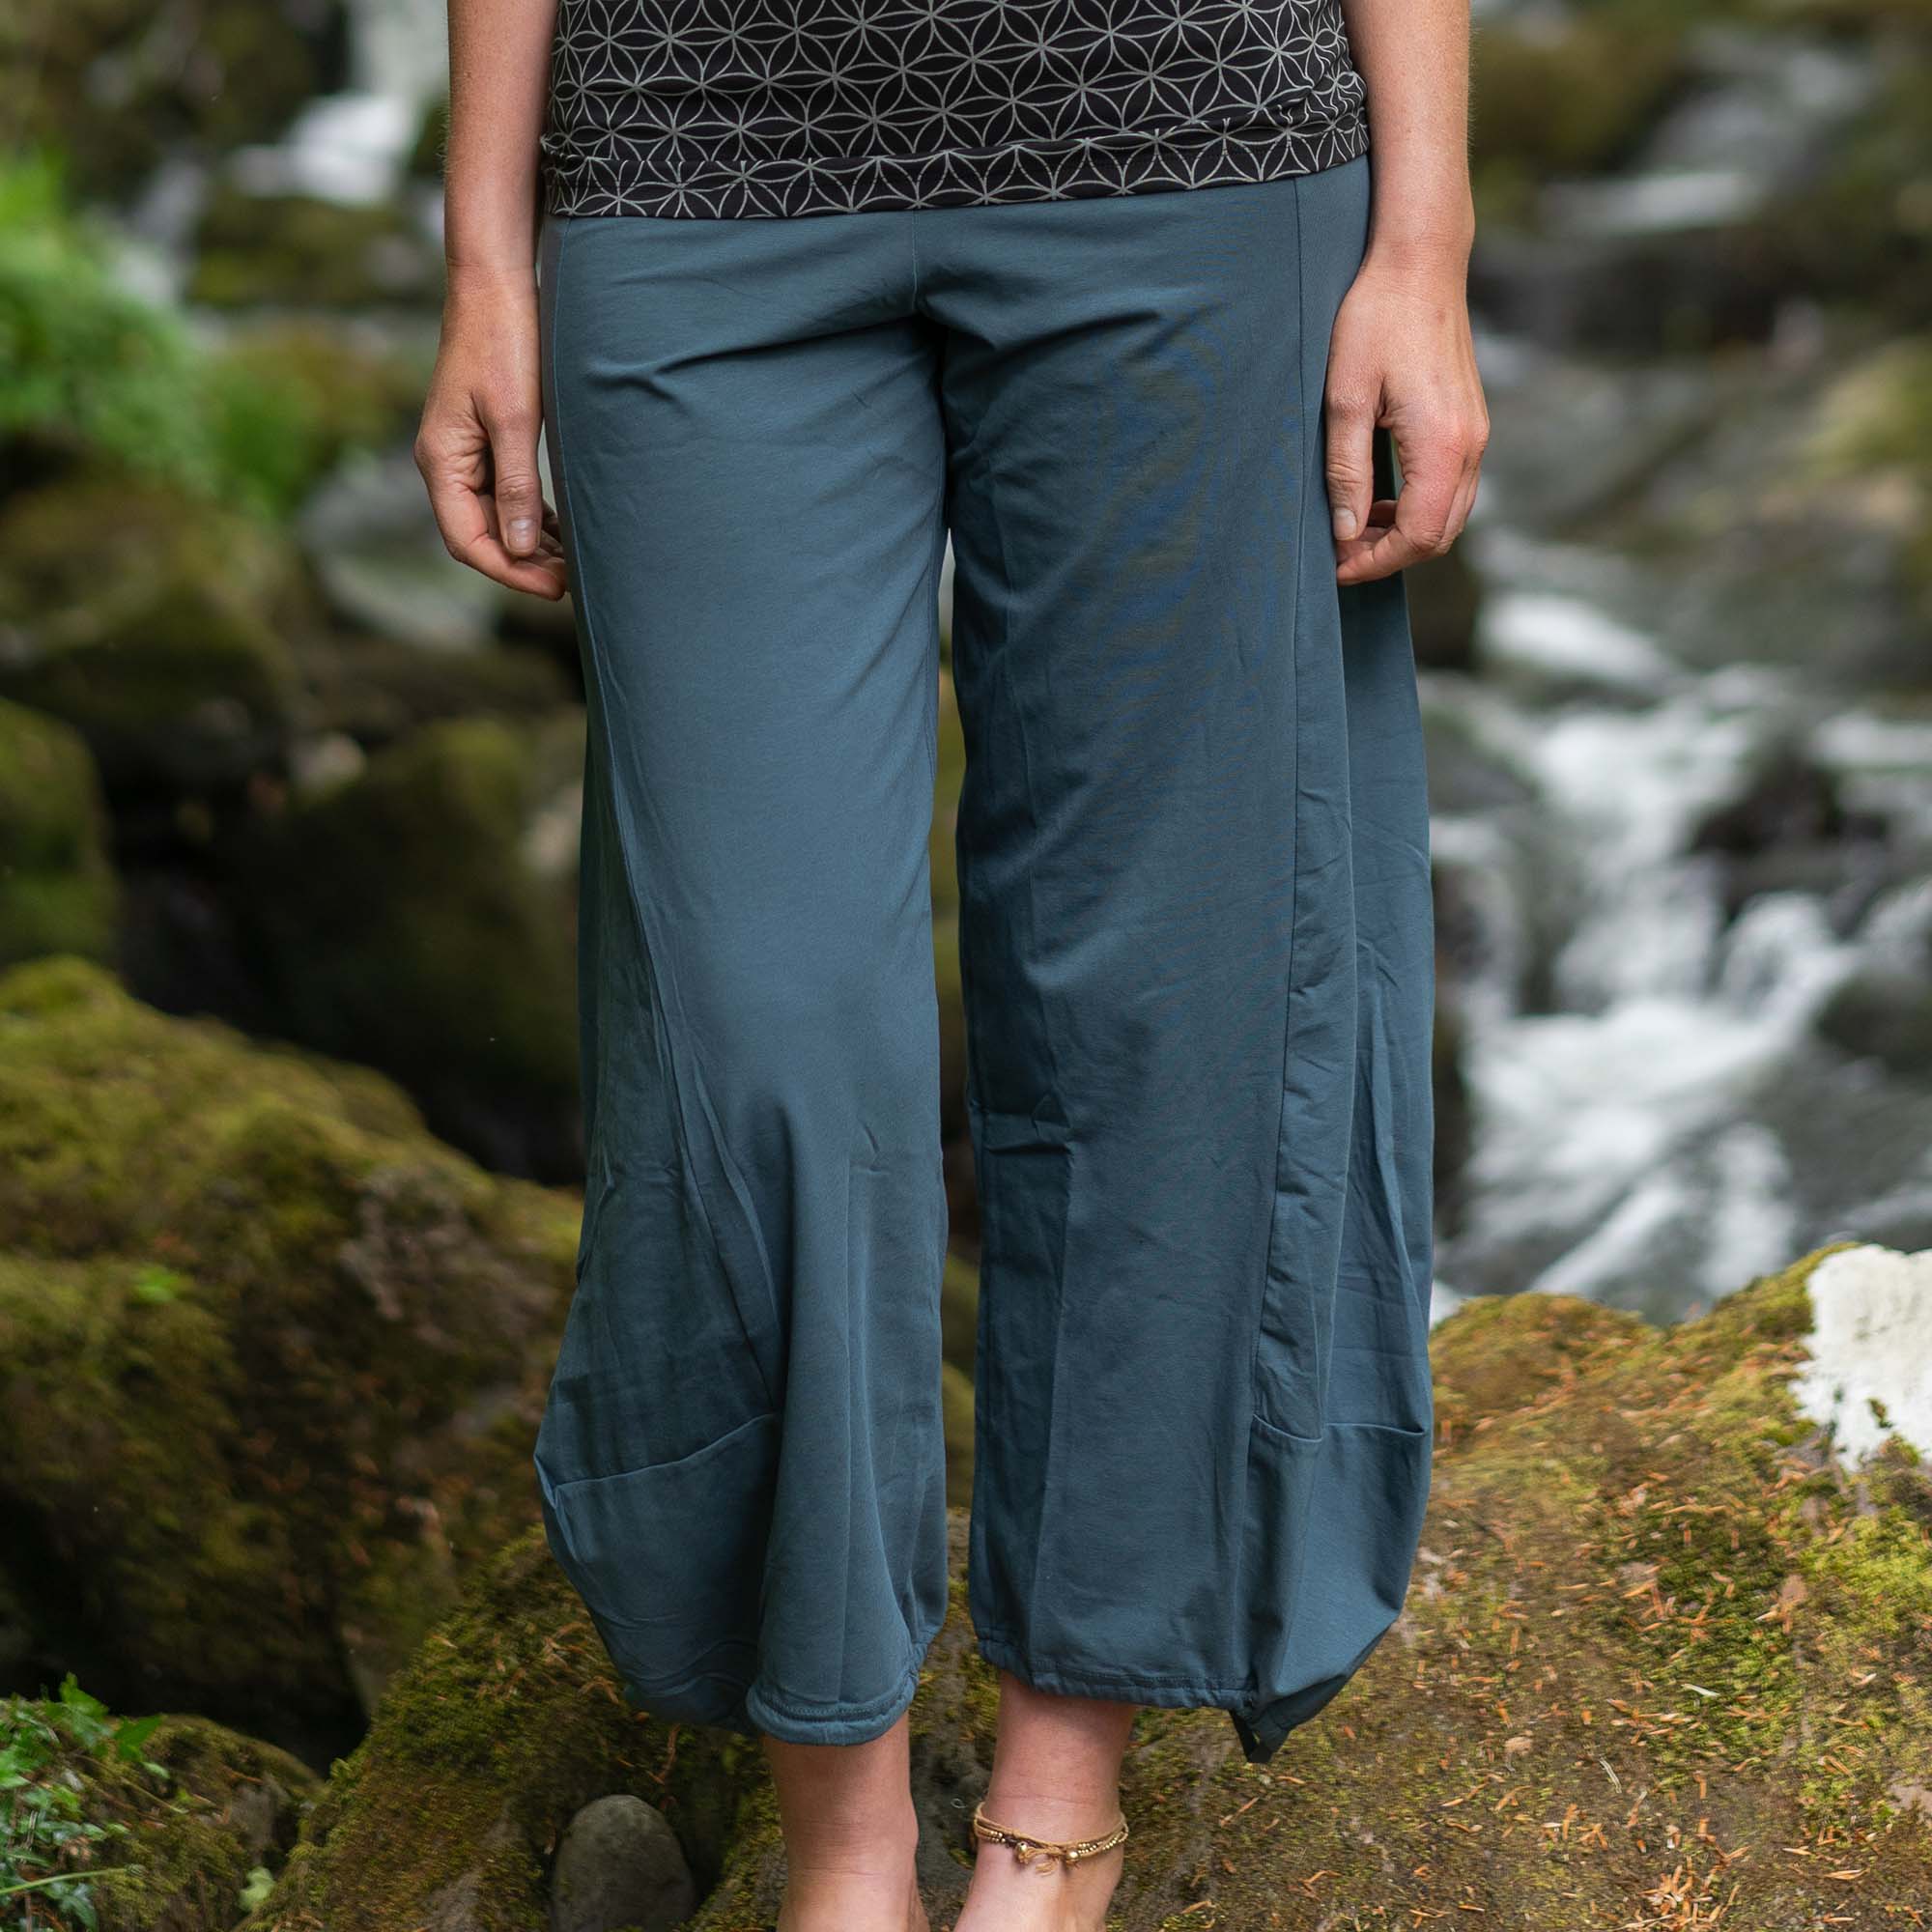 Women's Organic Cotton Yoga Pants